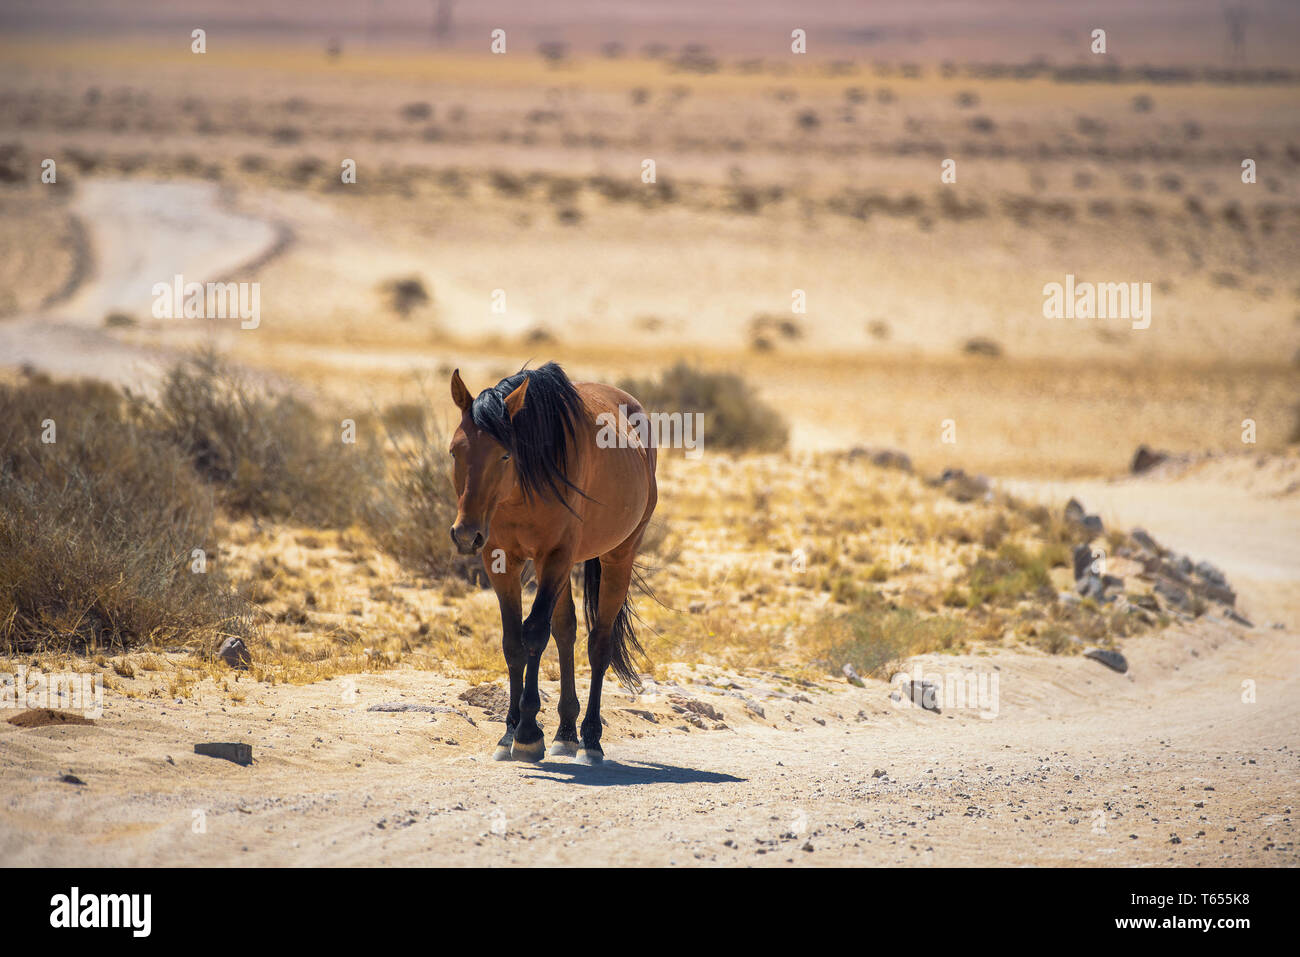 Wild horse of the Namib desert walks on a dirt road near Aus, south Namibia Stock Photo